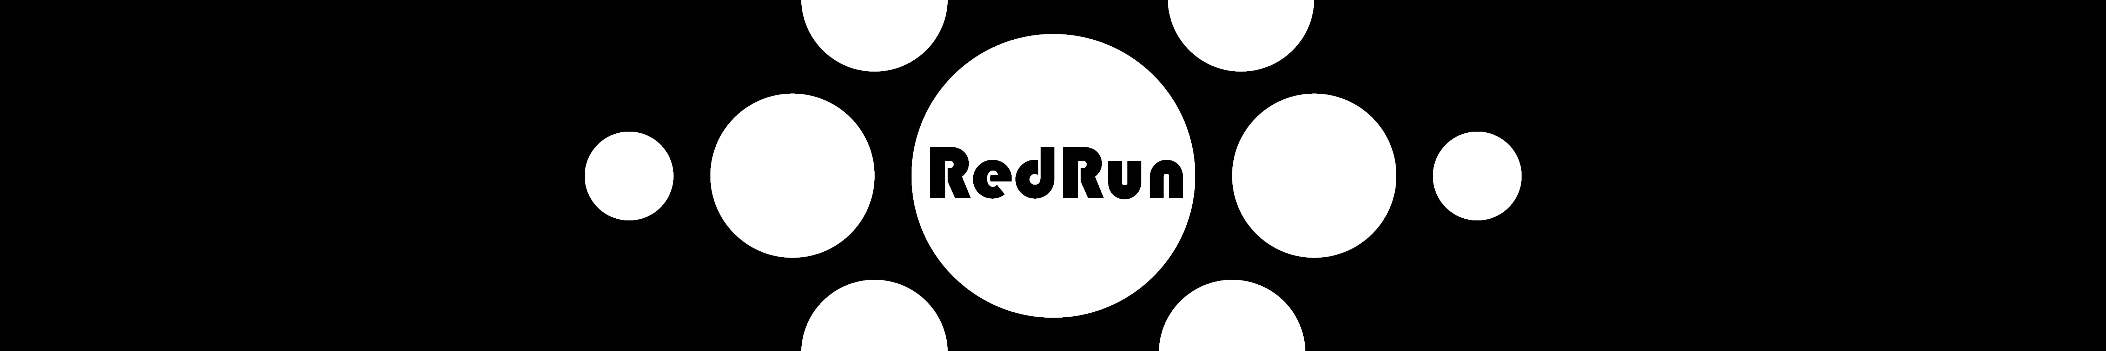 RedRun